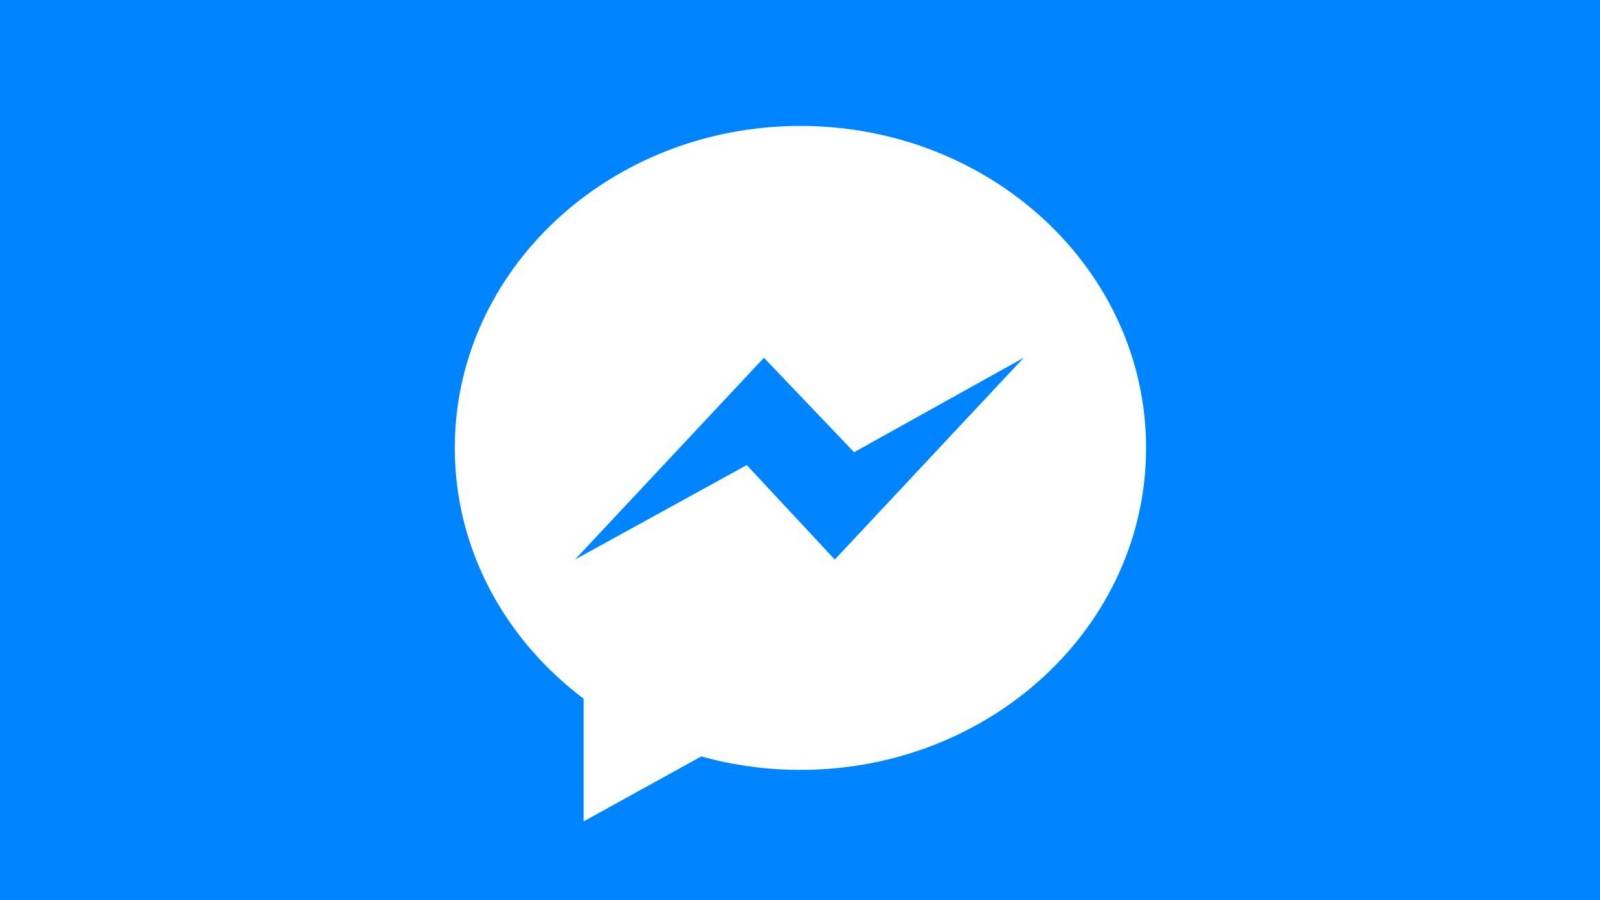 Facebook Messenger news update released